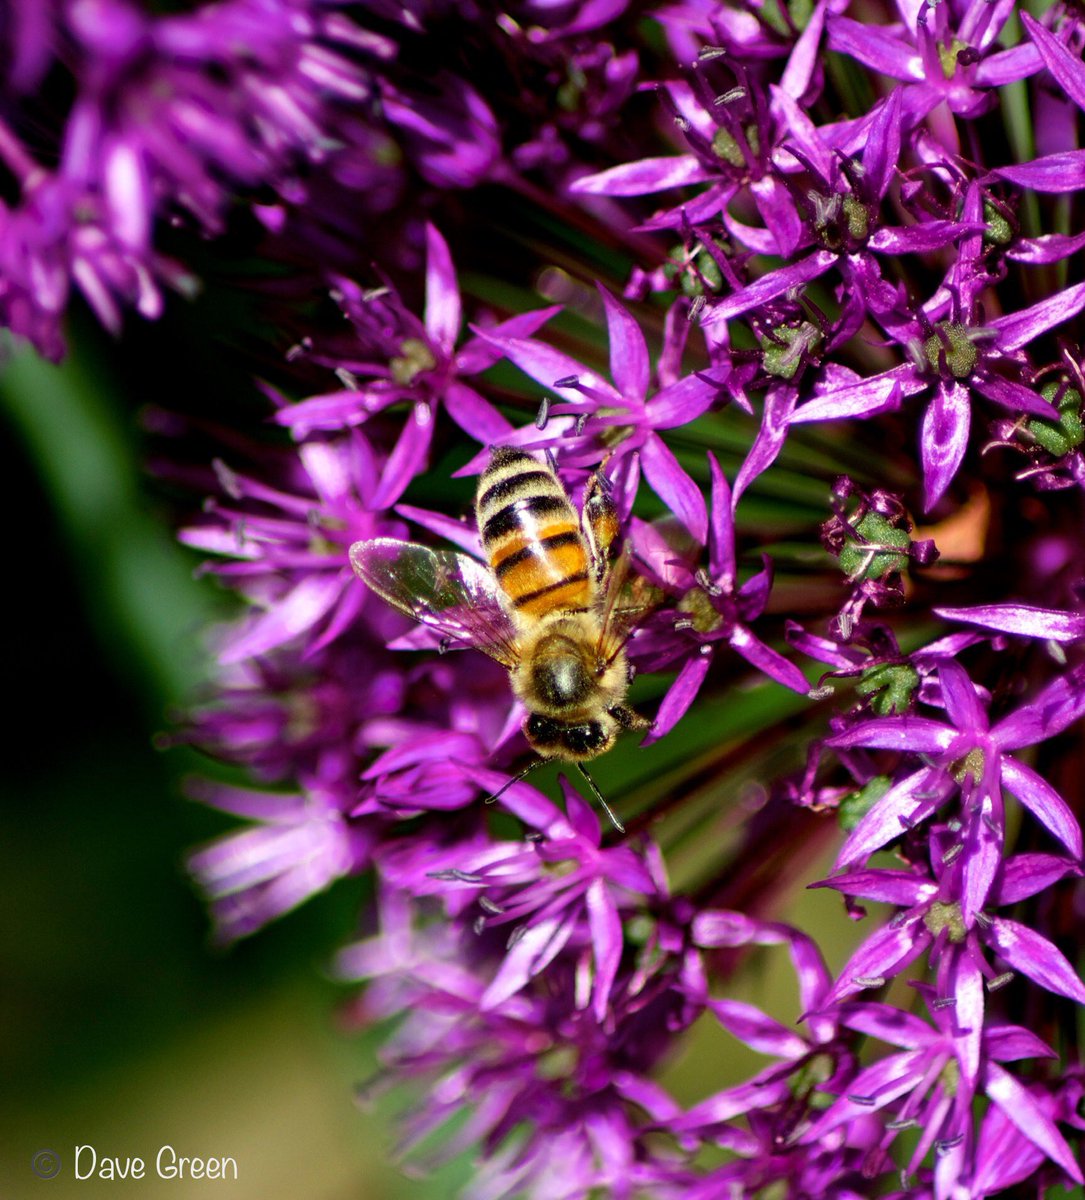 #Gardenersworld #nikonphotography @UKNikon @NikonEurope @NikonUSA @ThePhotoHour @MacroHour @TamronUK #flowerphotography #macrophotography @AP_Magazine #InsectThursday
Allium and the Bee